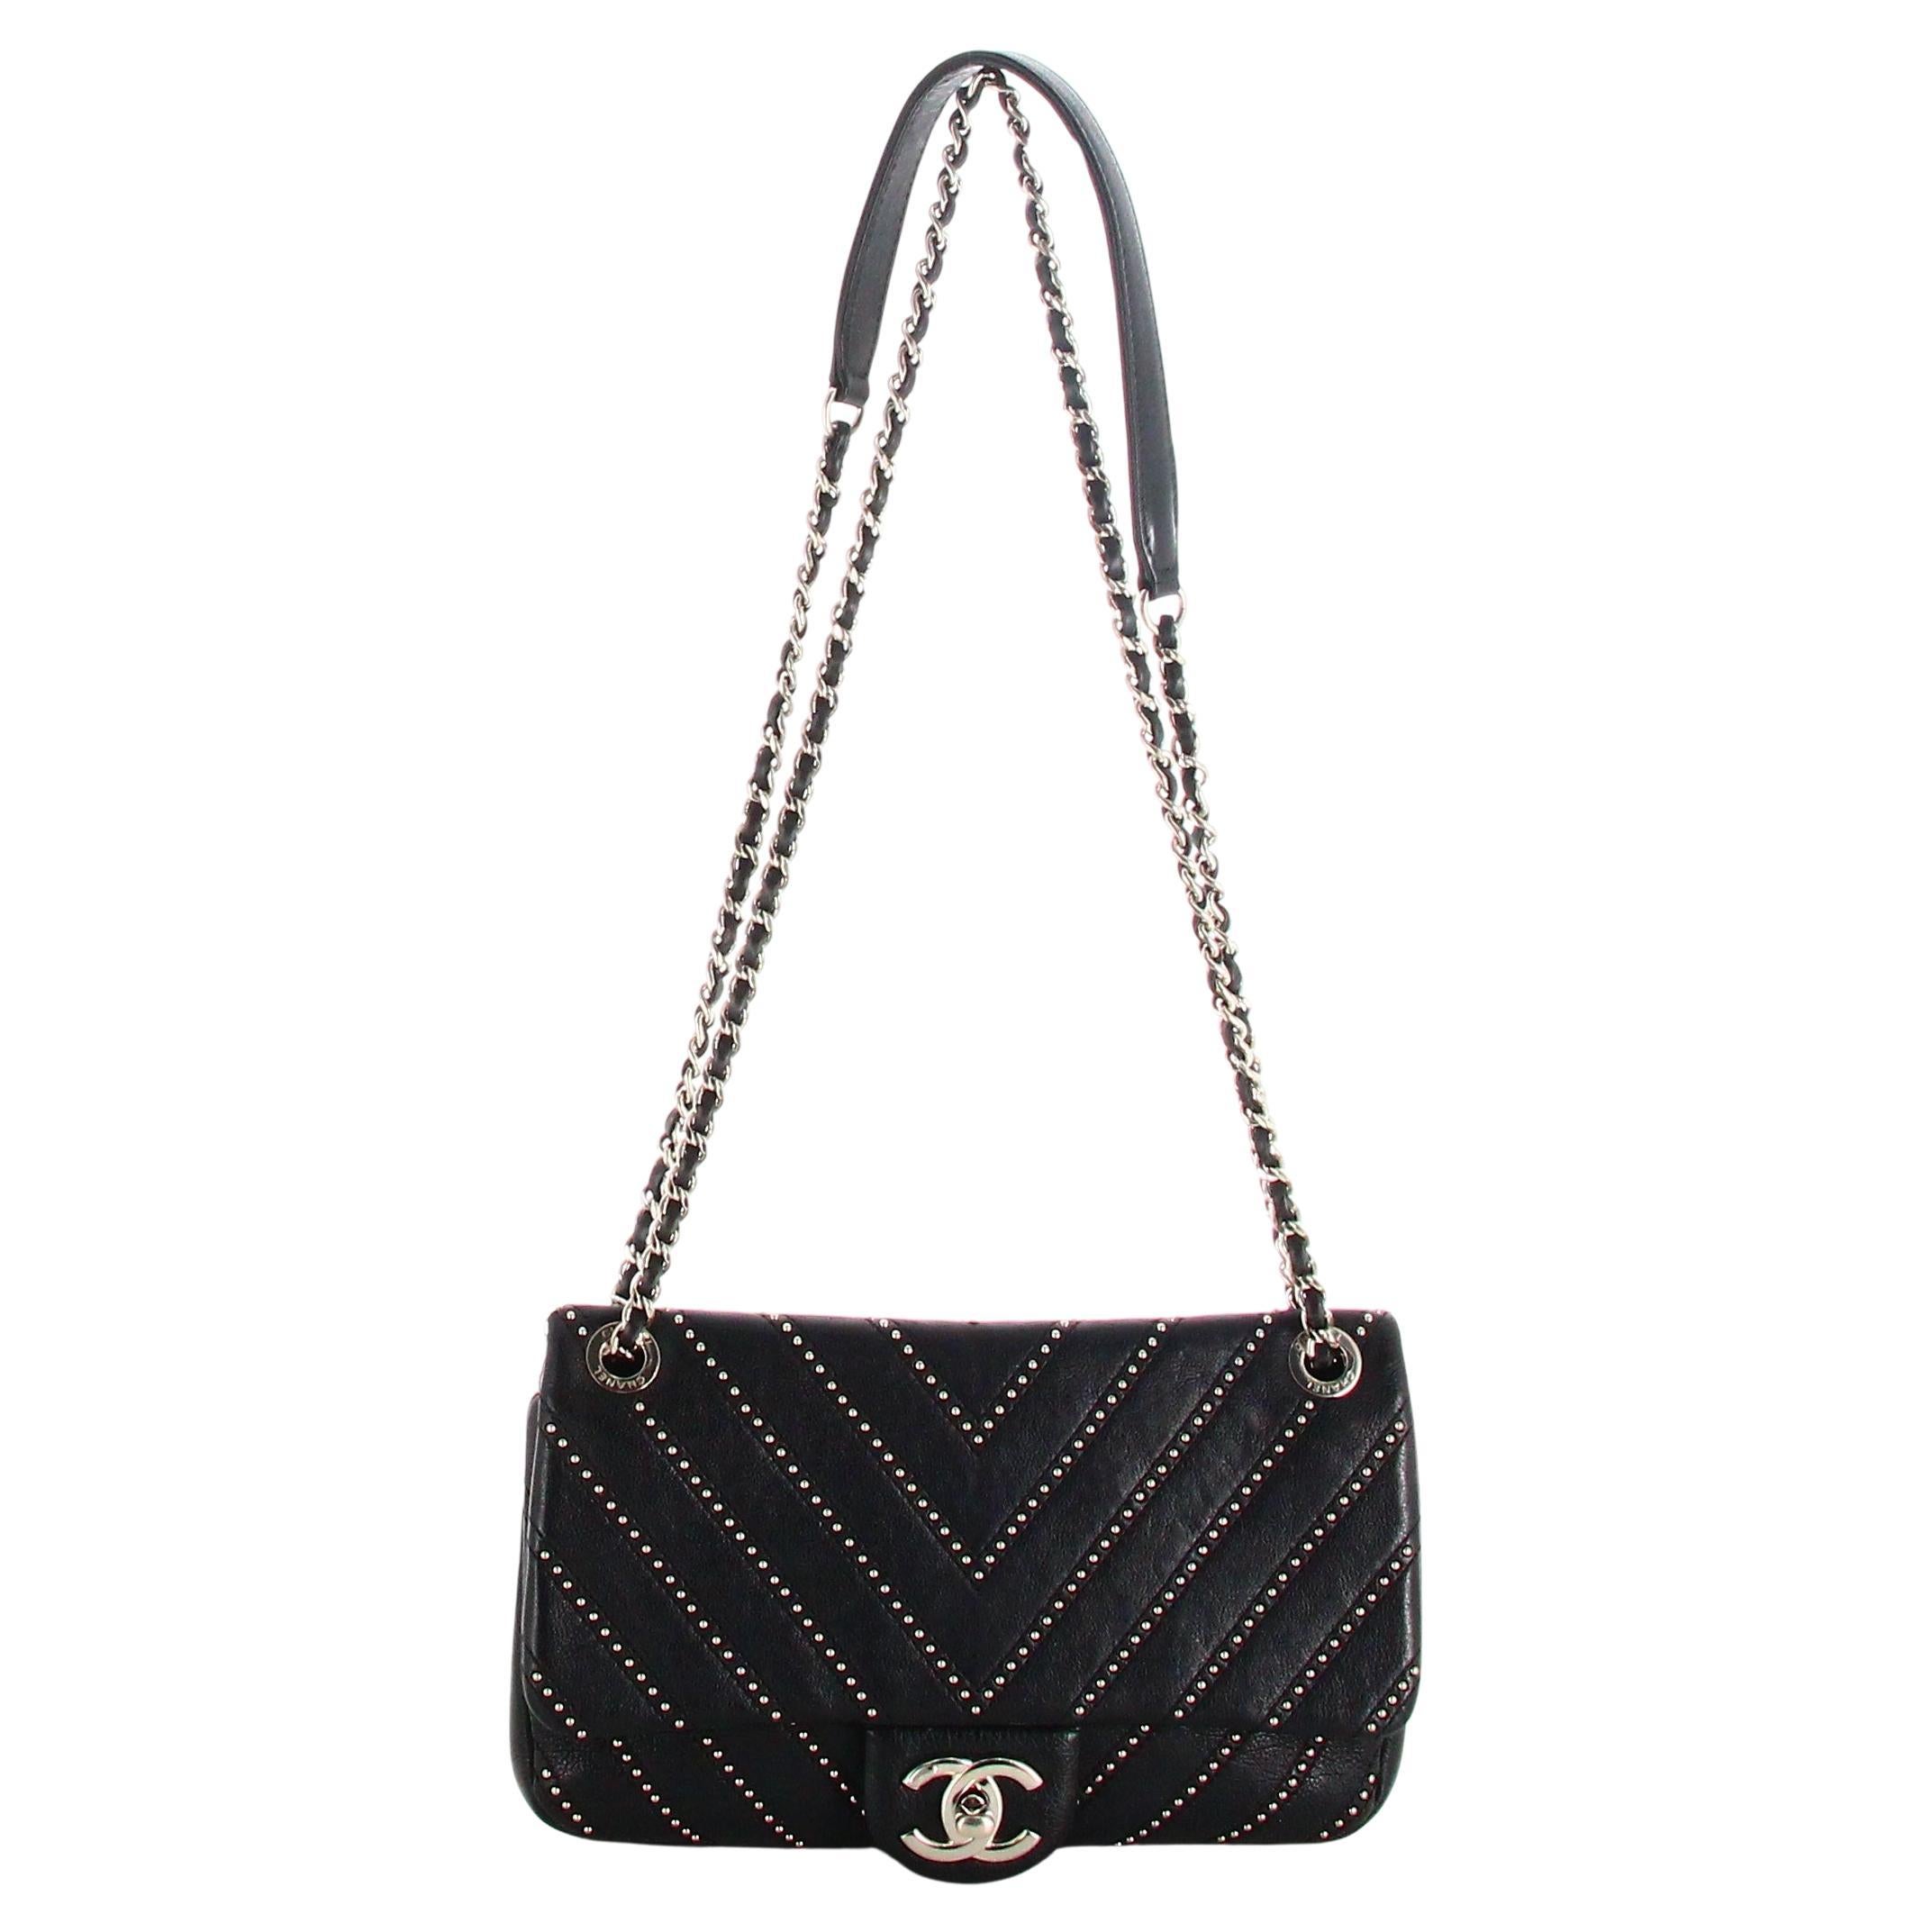 2017 Chanel Mini Handbag Chevron Stud Wars Flap Leather Black For Sale